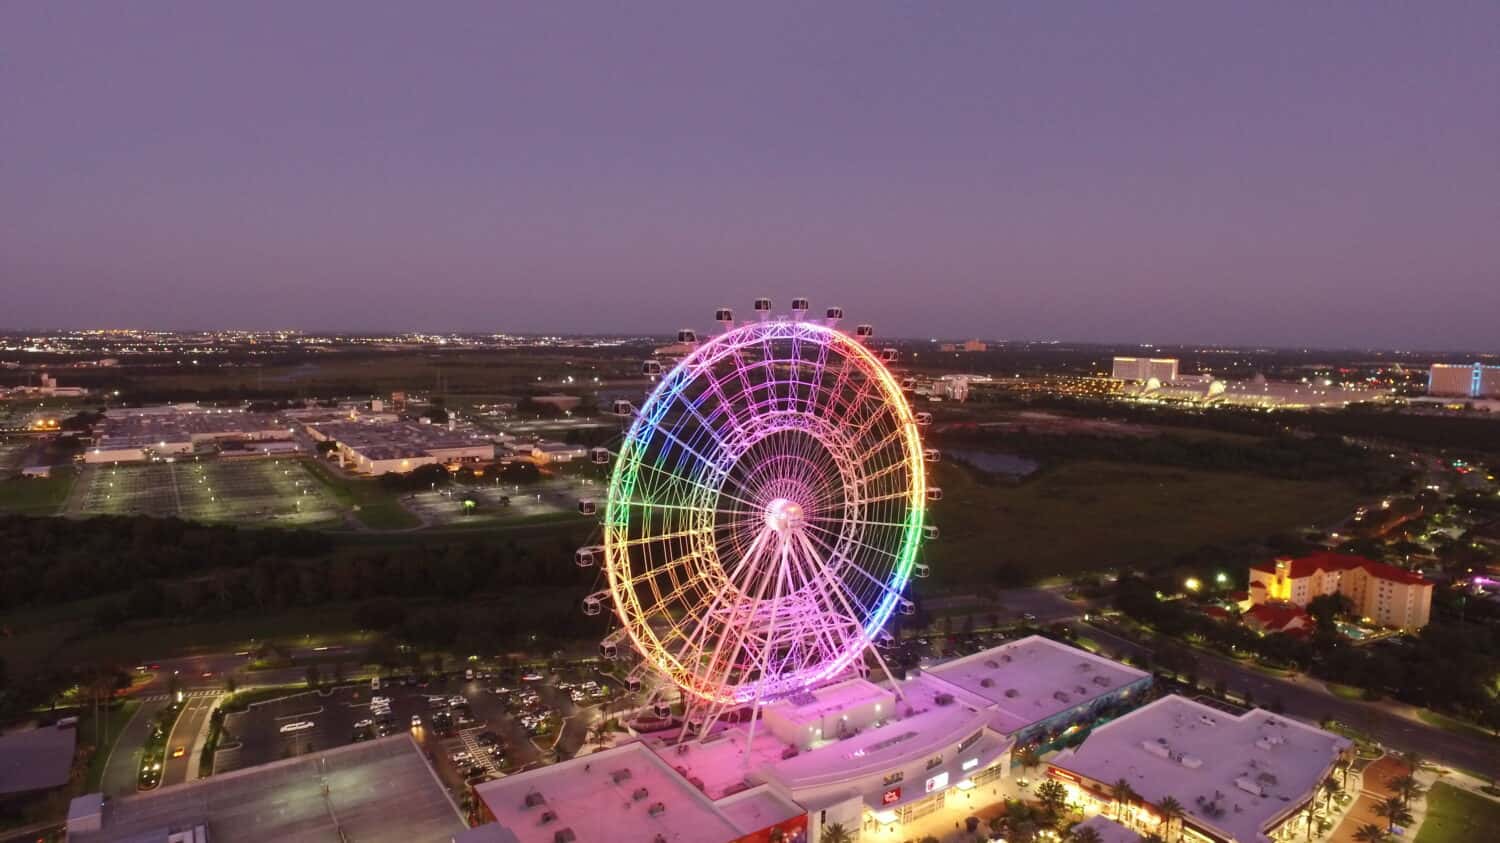 The Wheel at ICON Park in Orlando